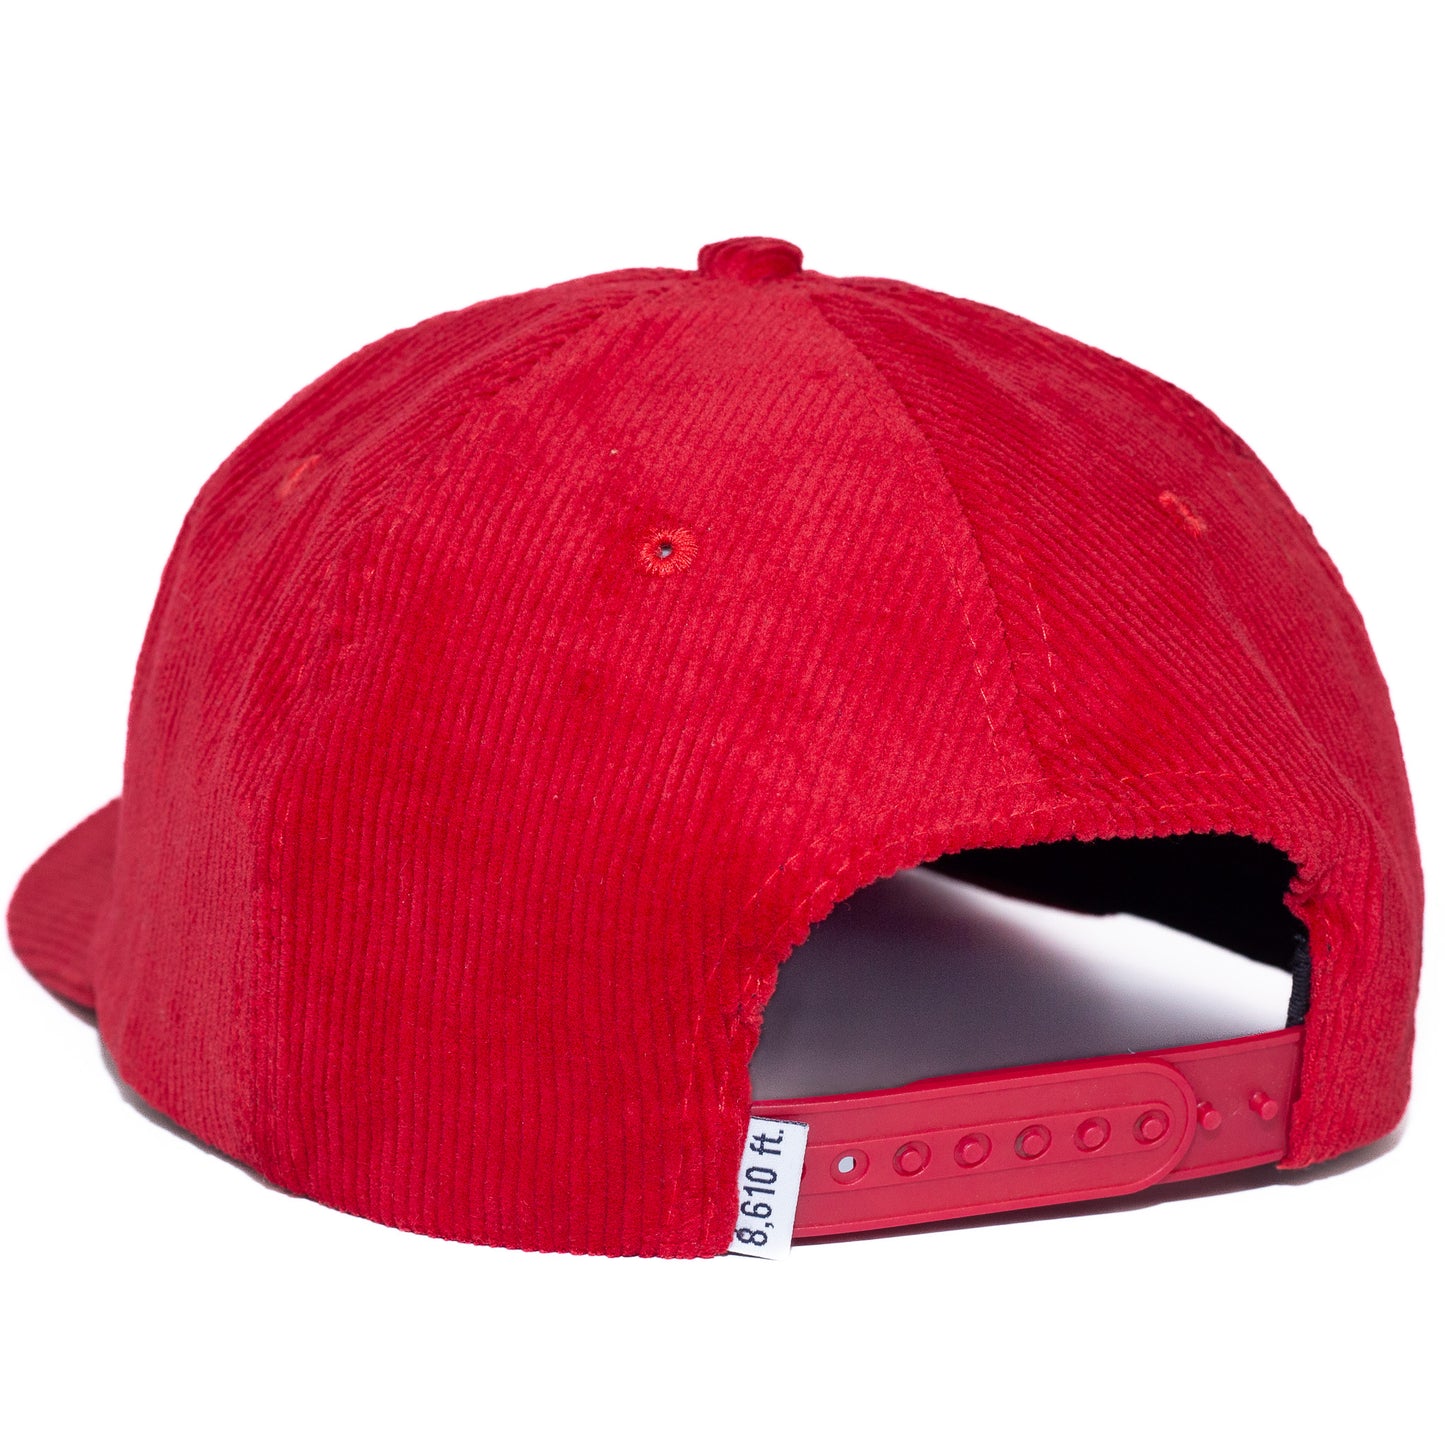 Northstar Cap - Red